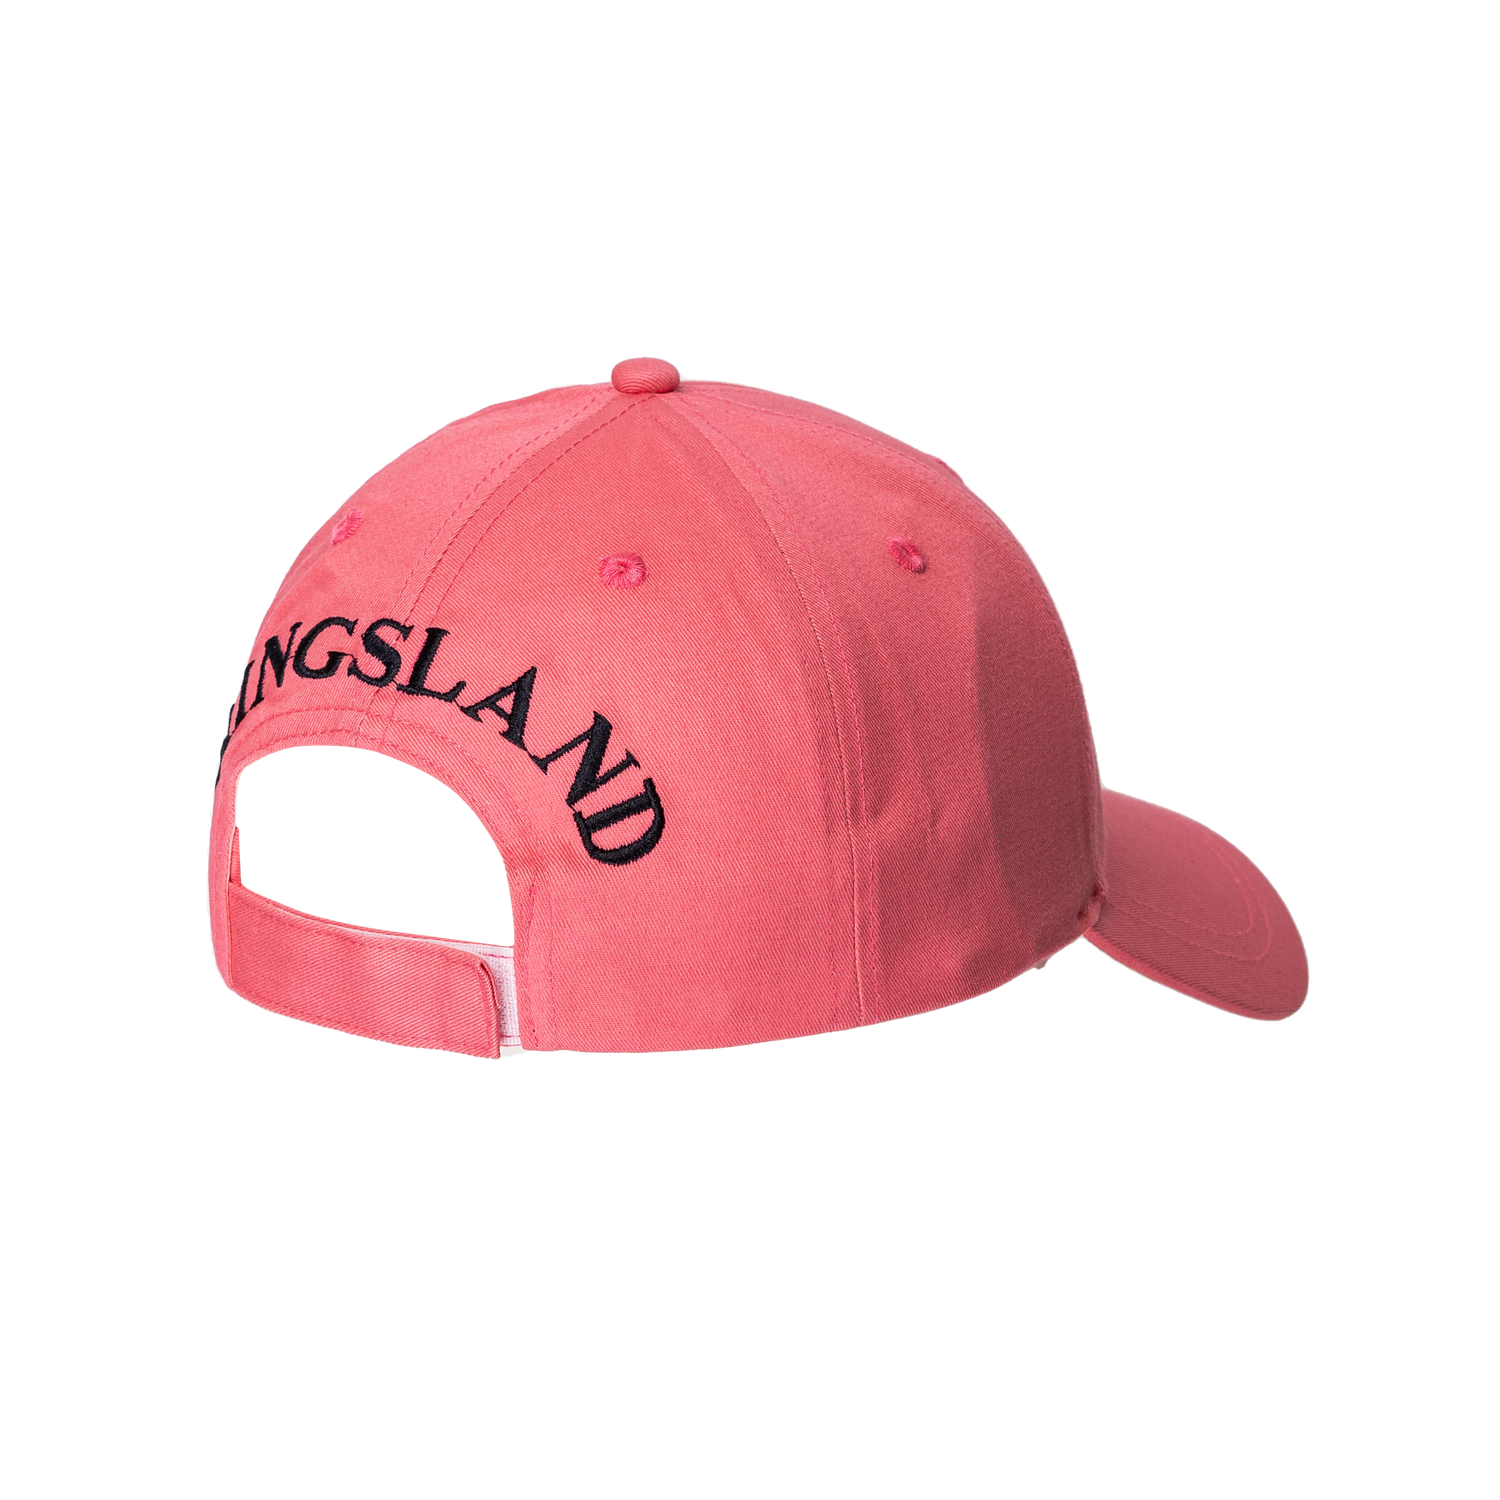 equestrian pink baseball hat